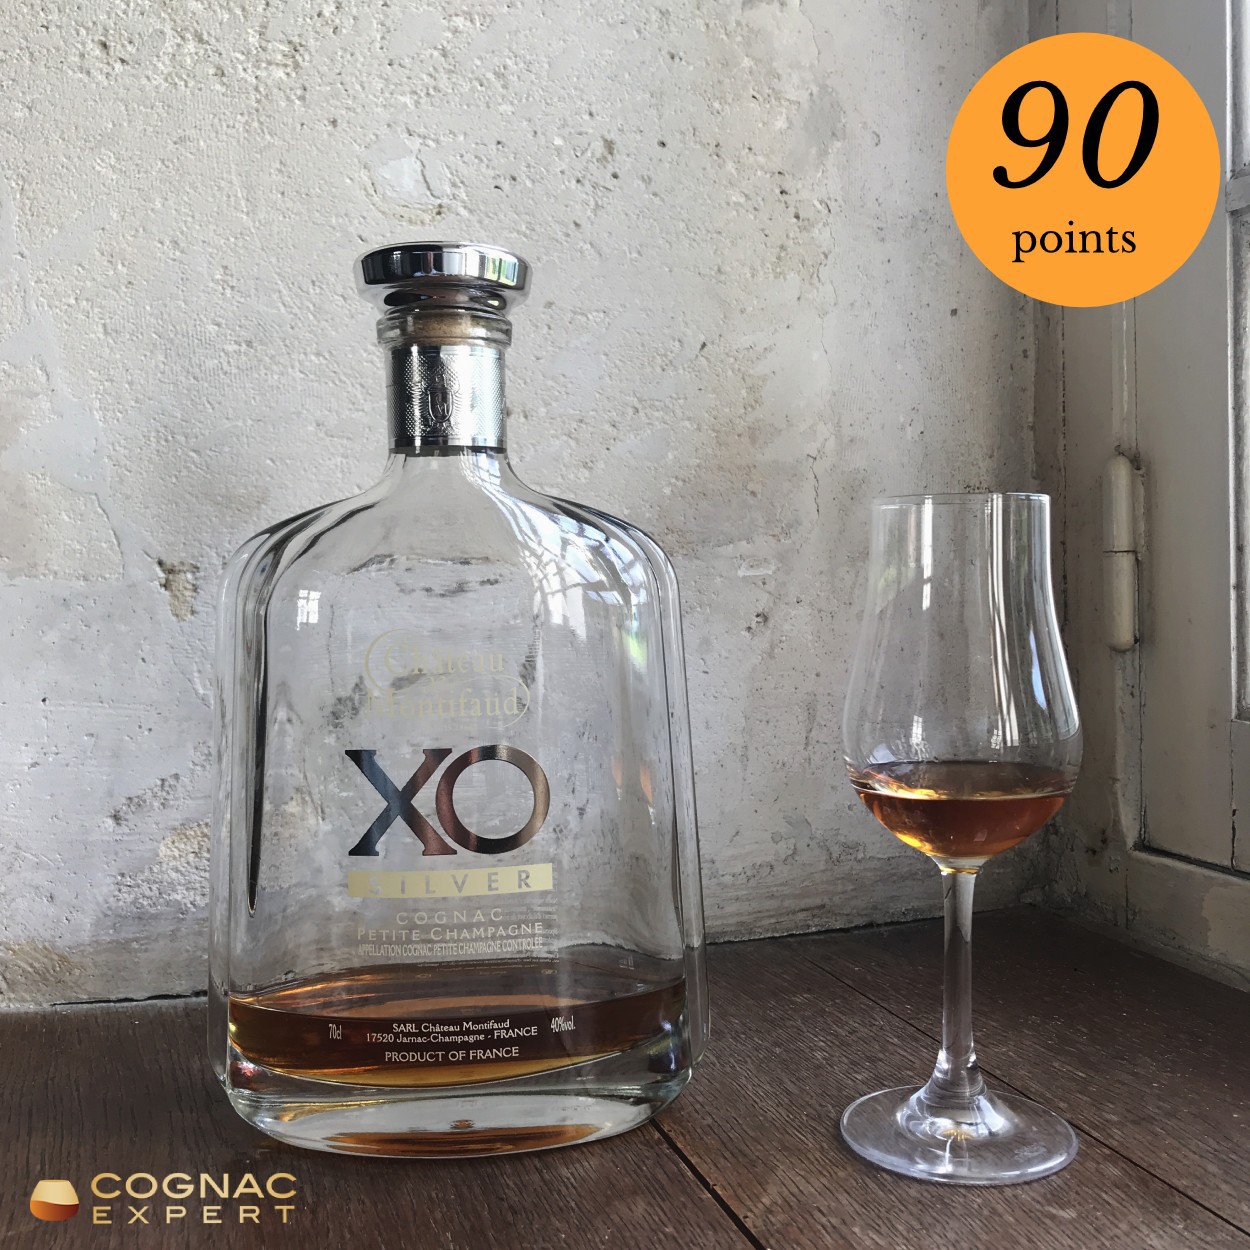 Montifaud XO Silver Cognac and glass